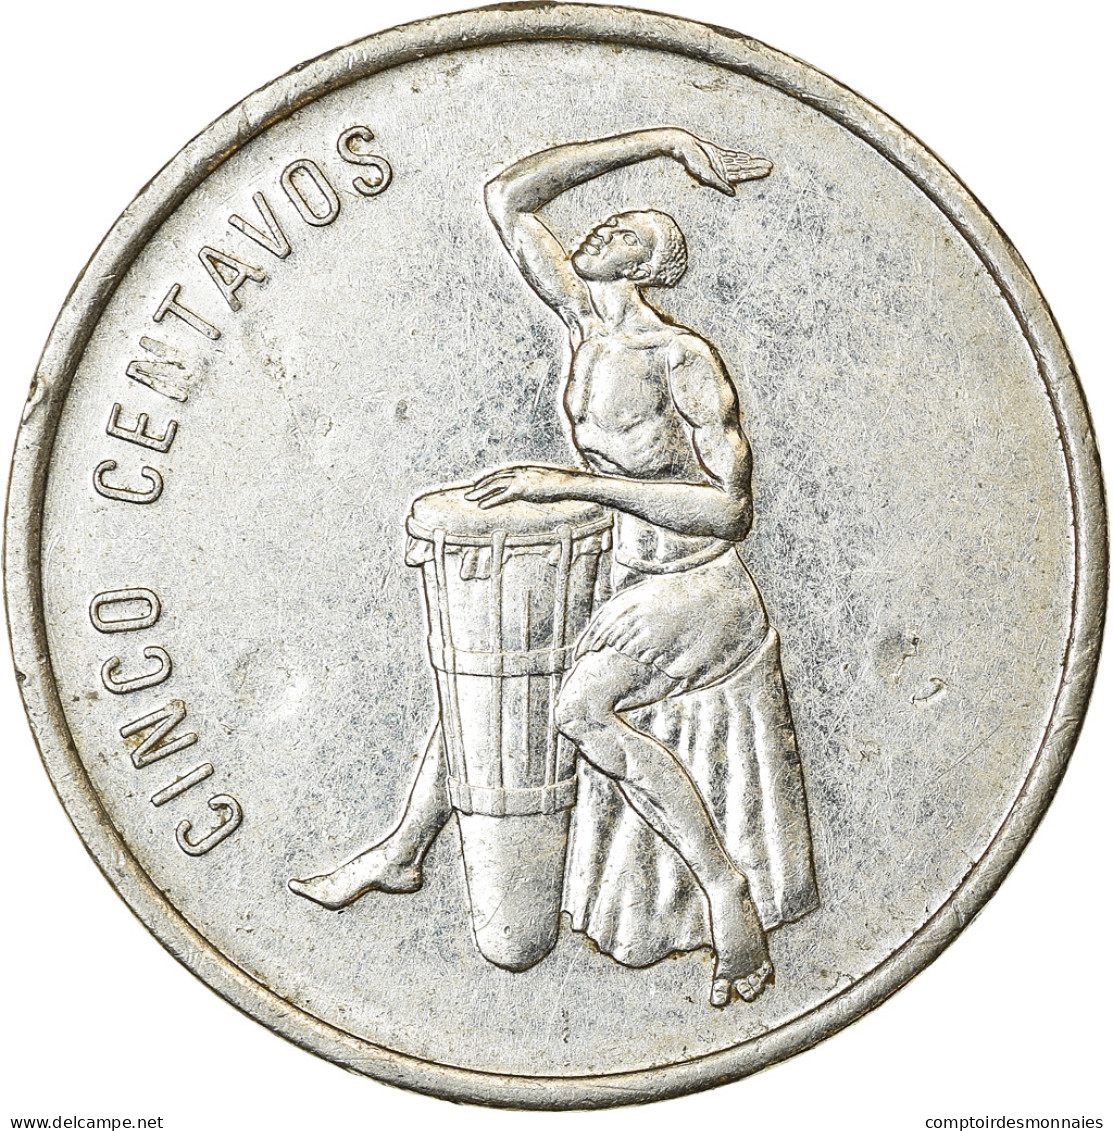 Monnaie, Dominican Republic, 5 Centavos, 1989, TTB, Nickel Clad Steel, KM:69 - Dominicaanse Republiek